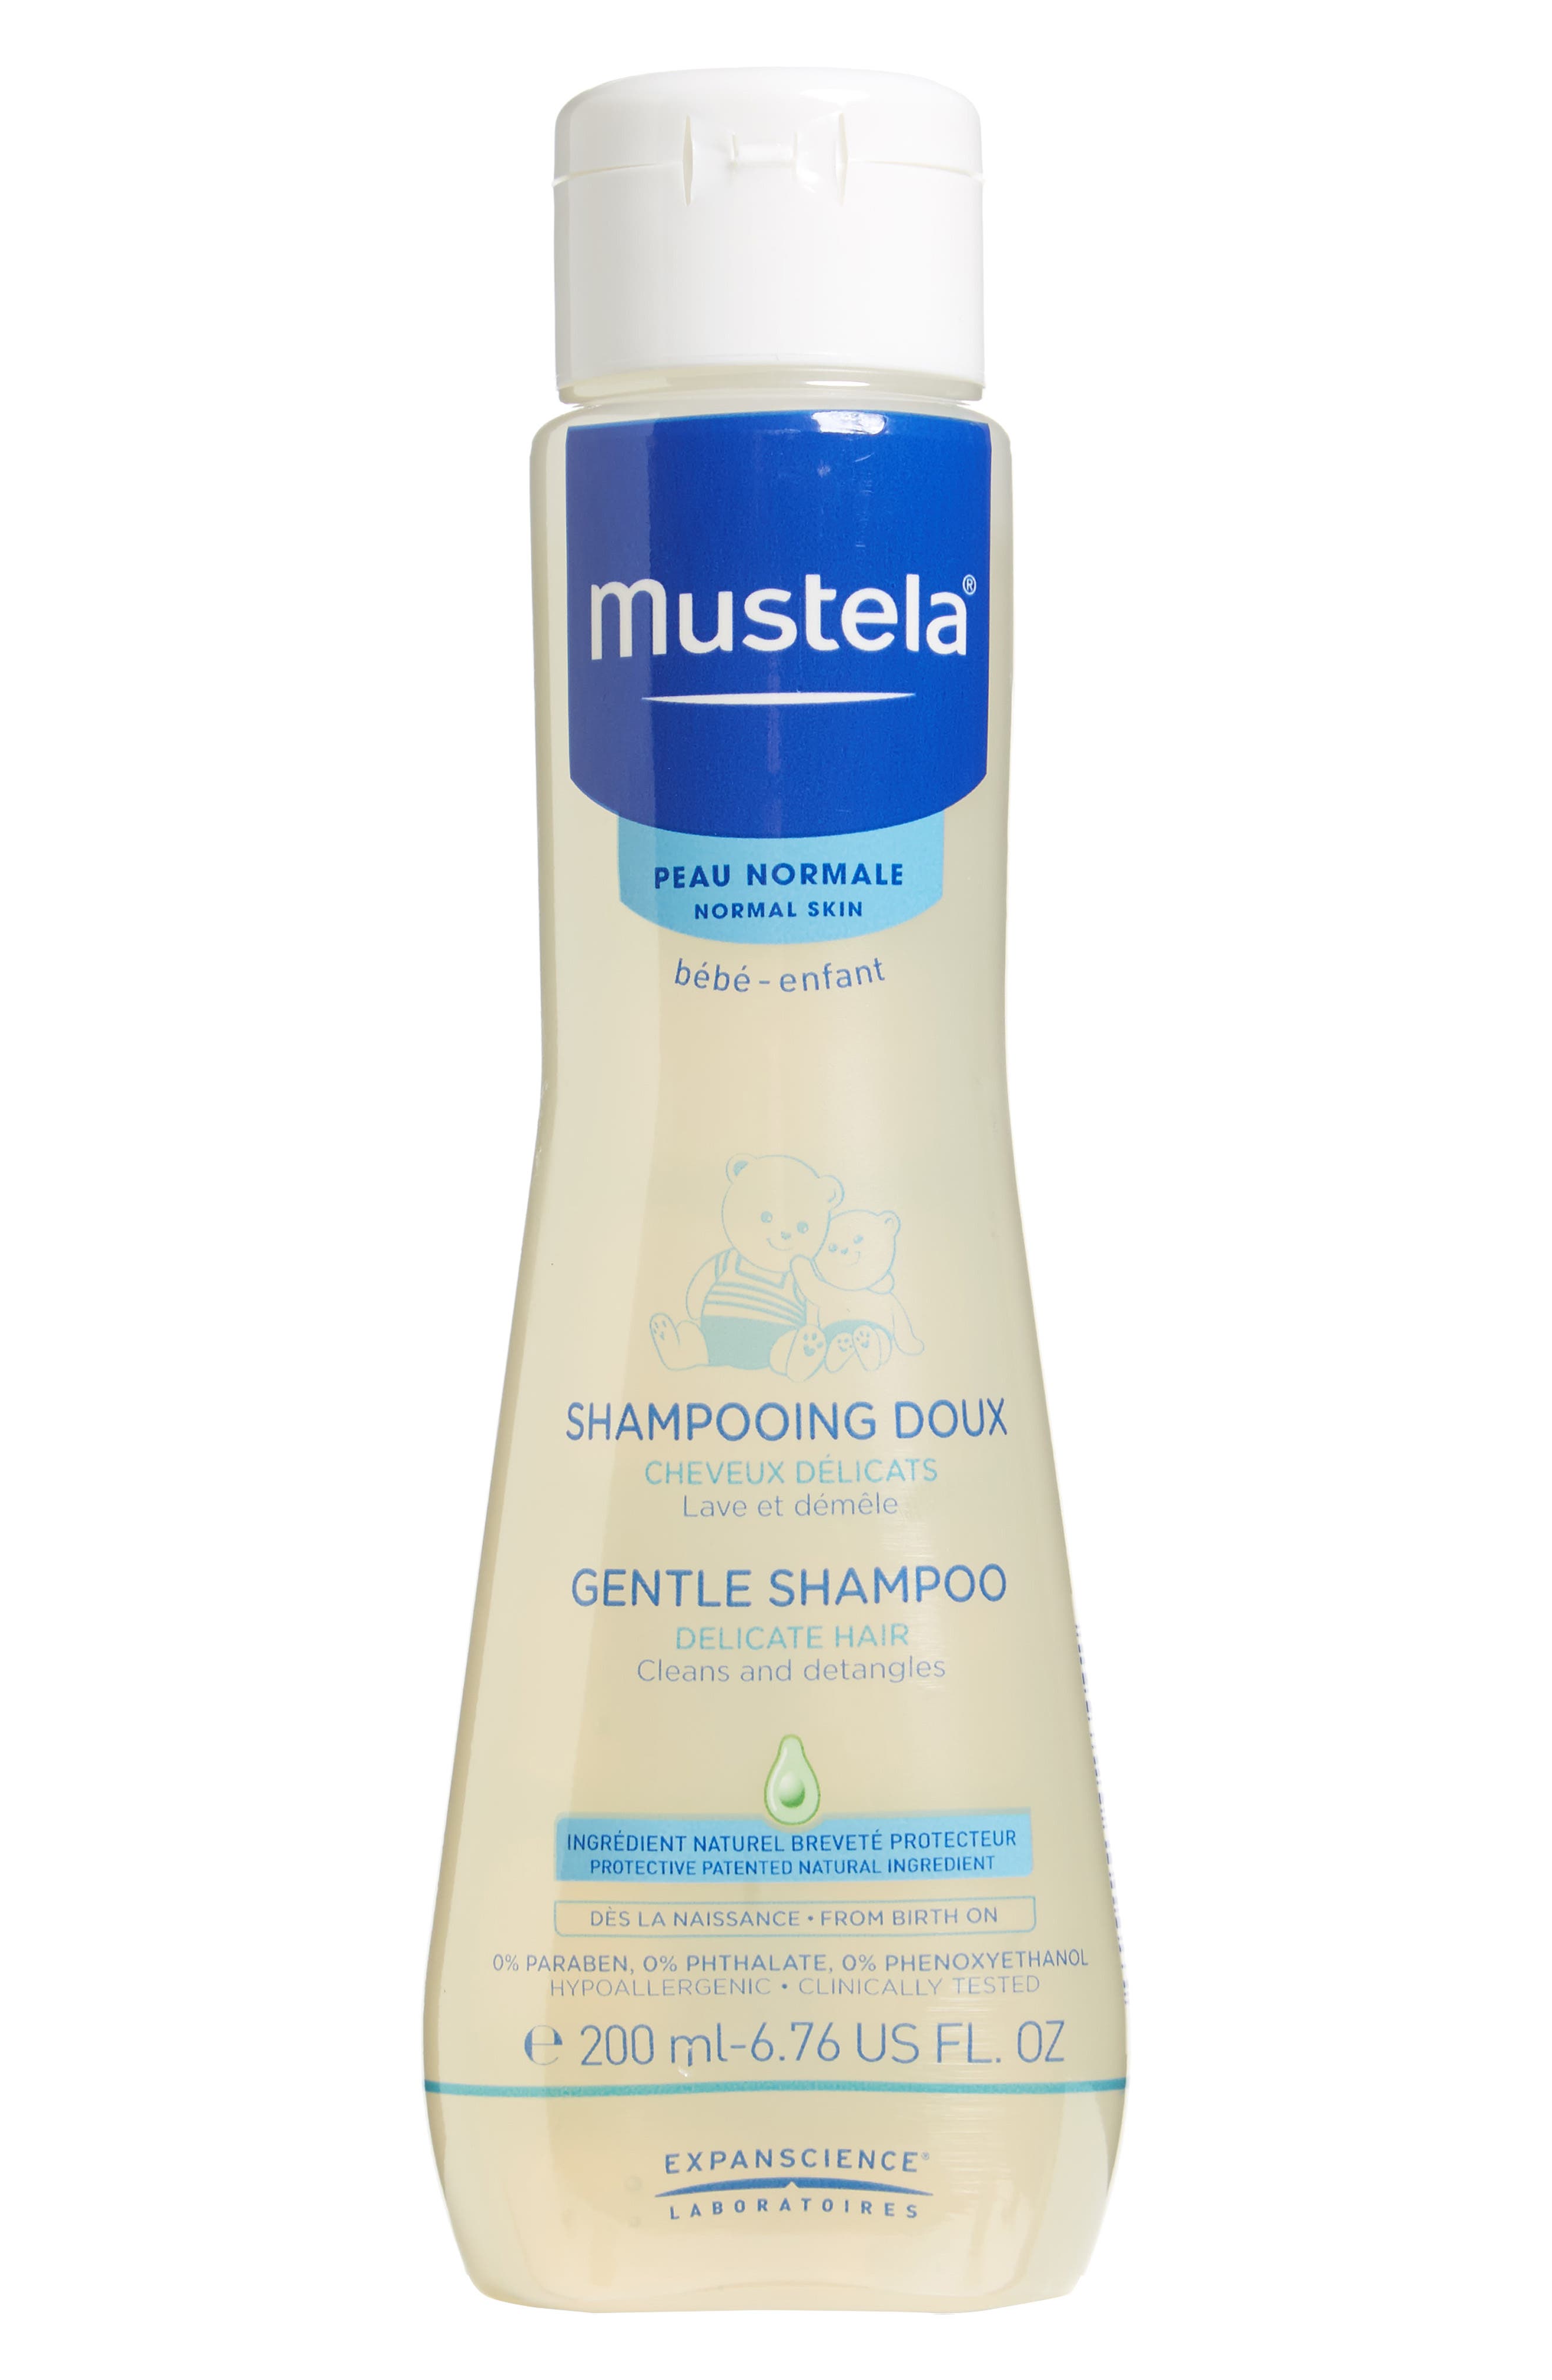 mustela gentle shampoo